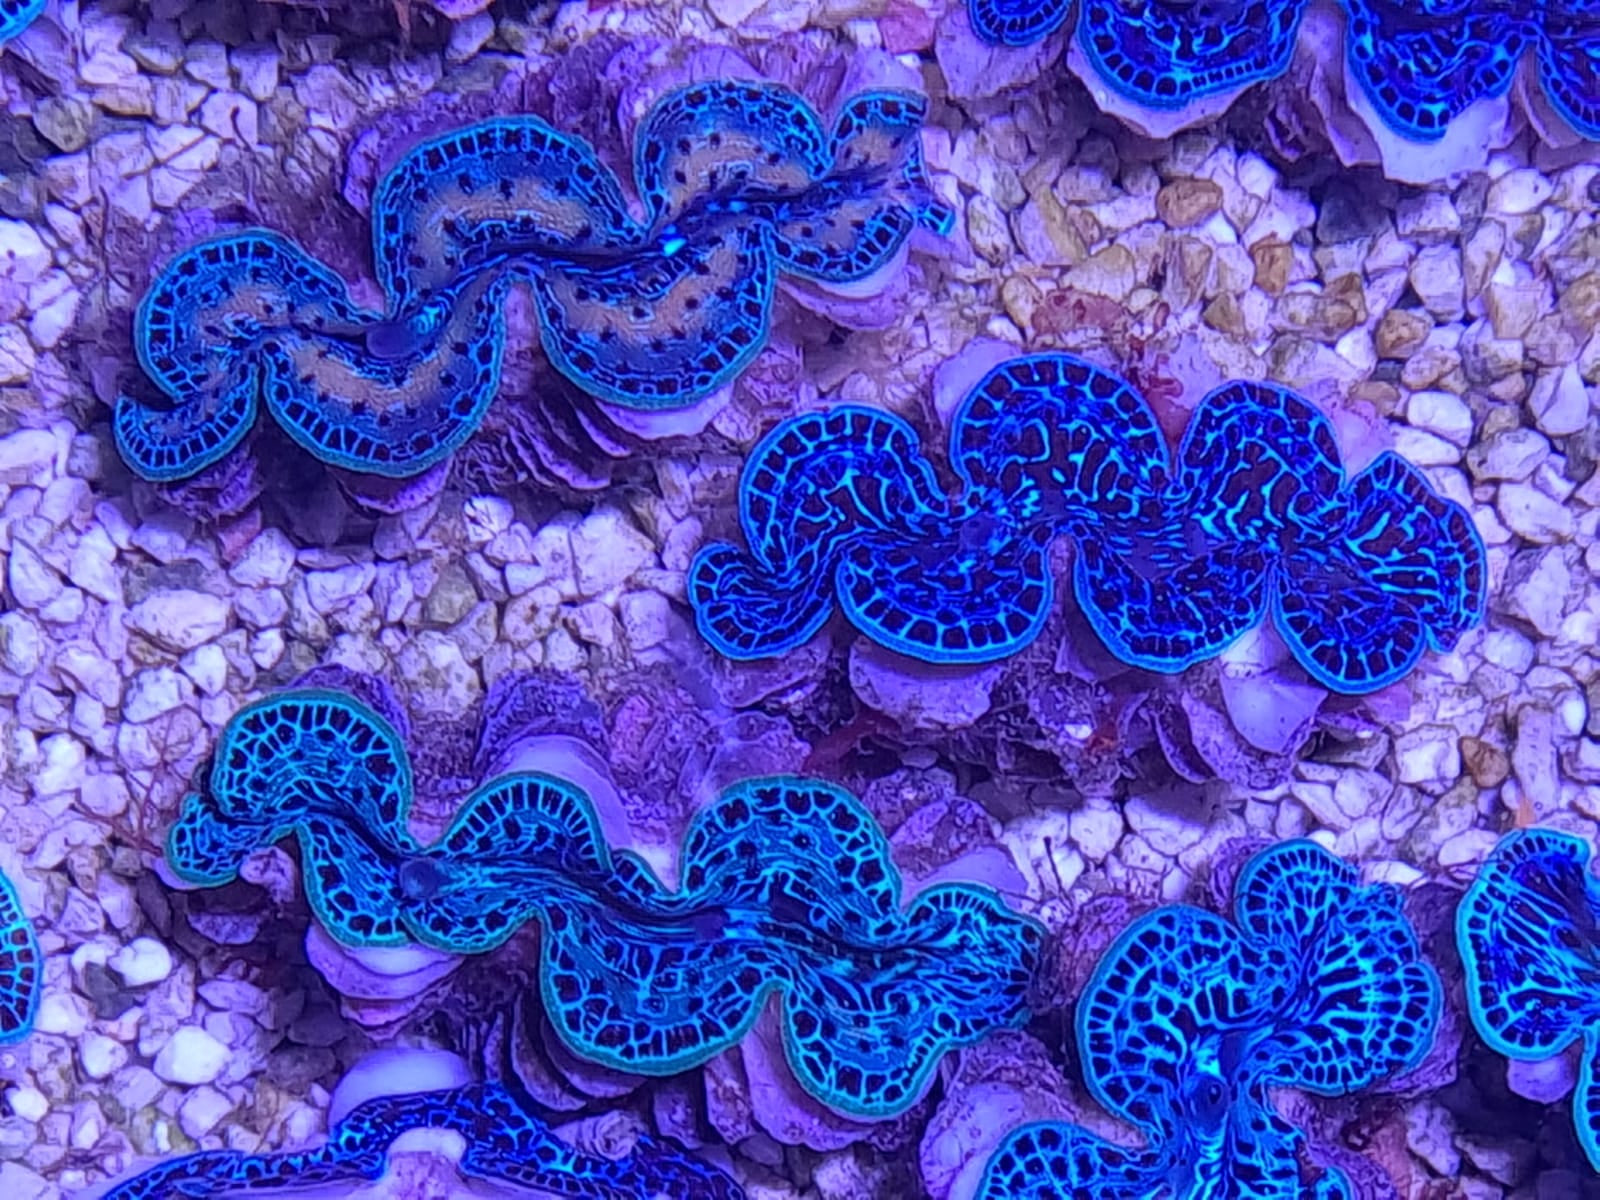 Tridacna maxima (Ultra Blue Pacific) - Maxima clam (Ultra Blue Pacific)